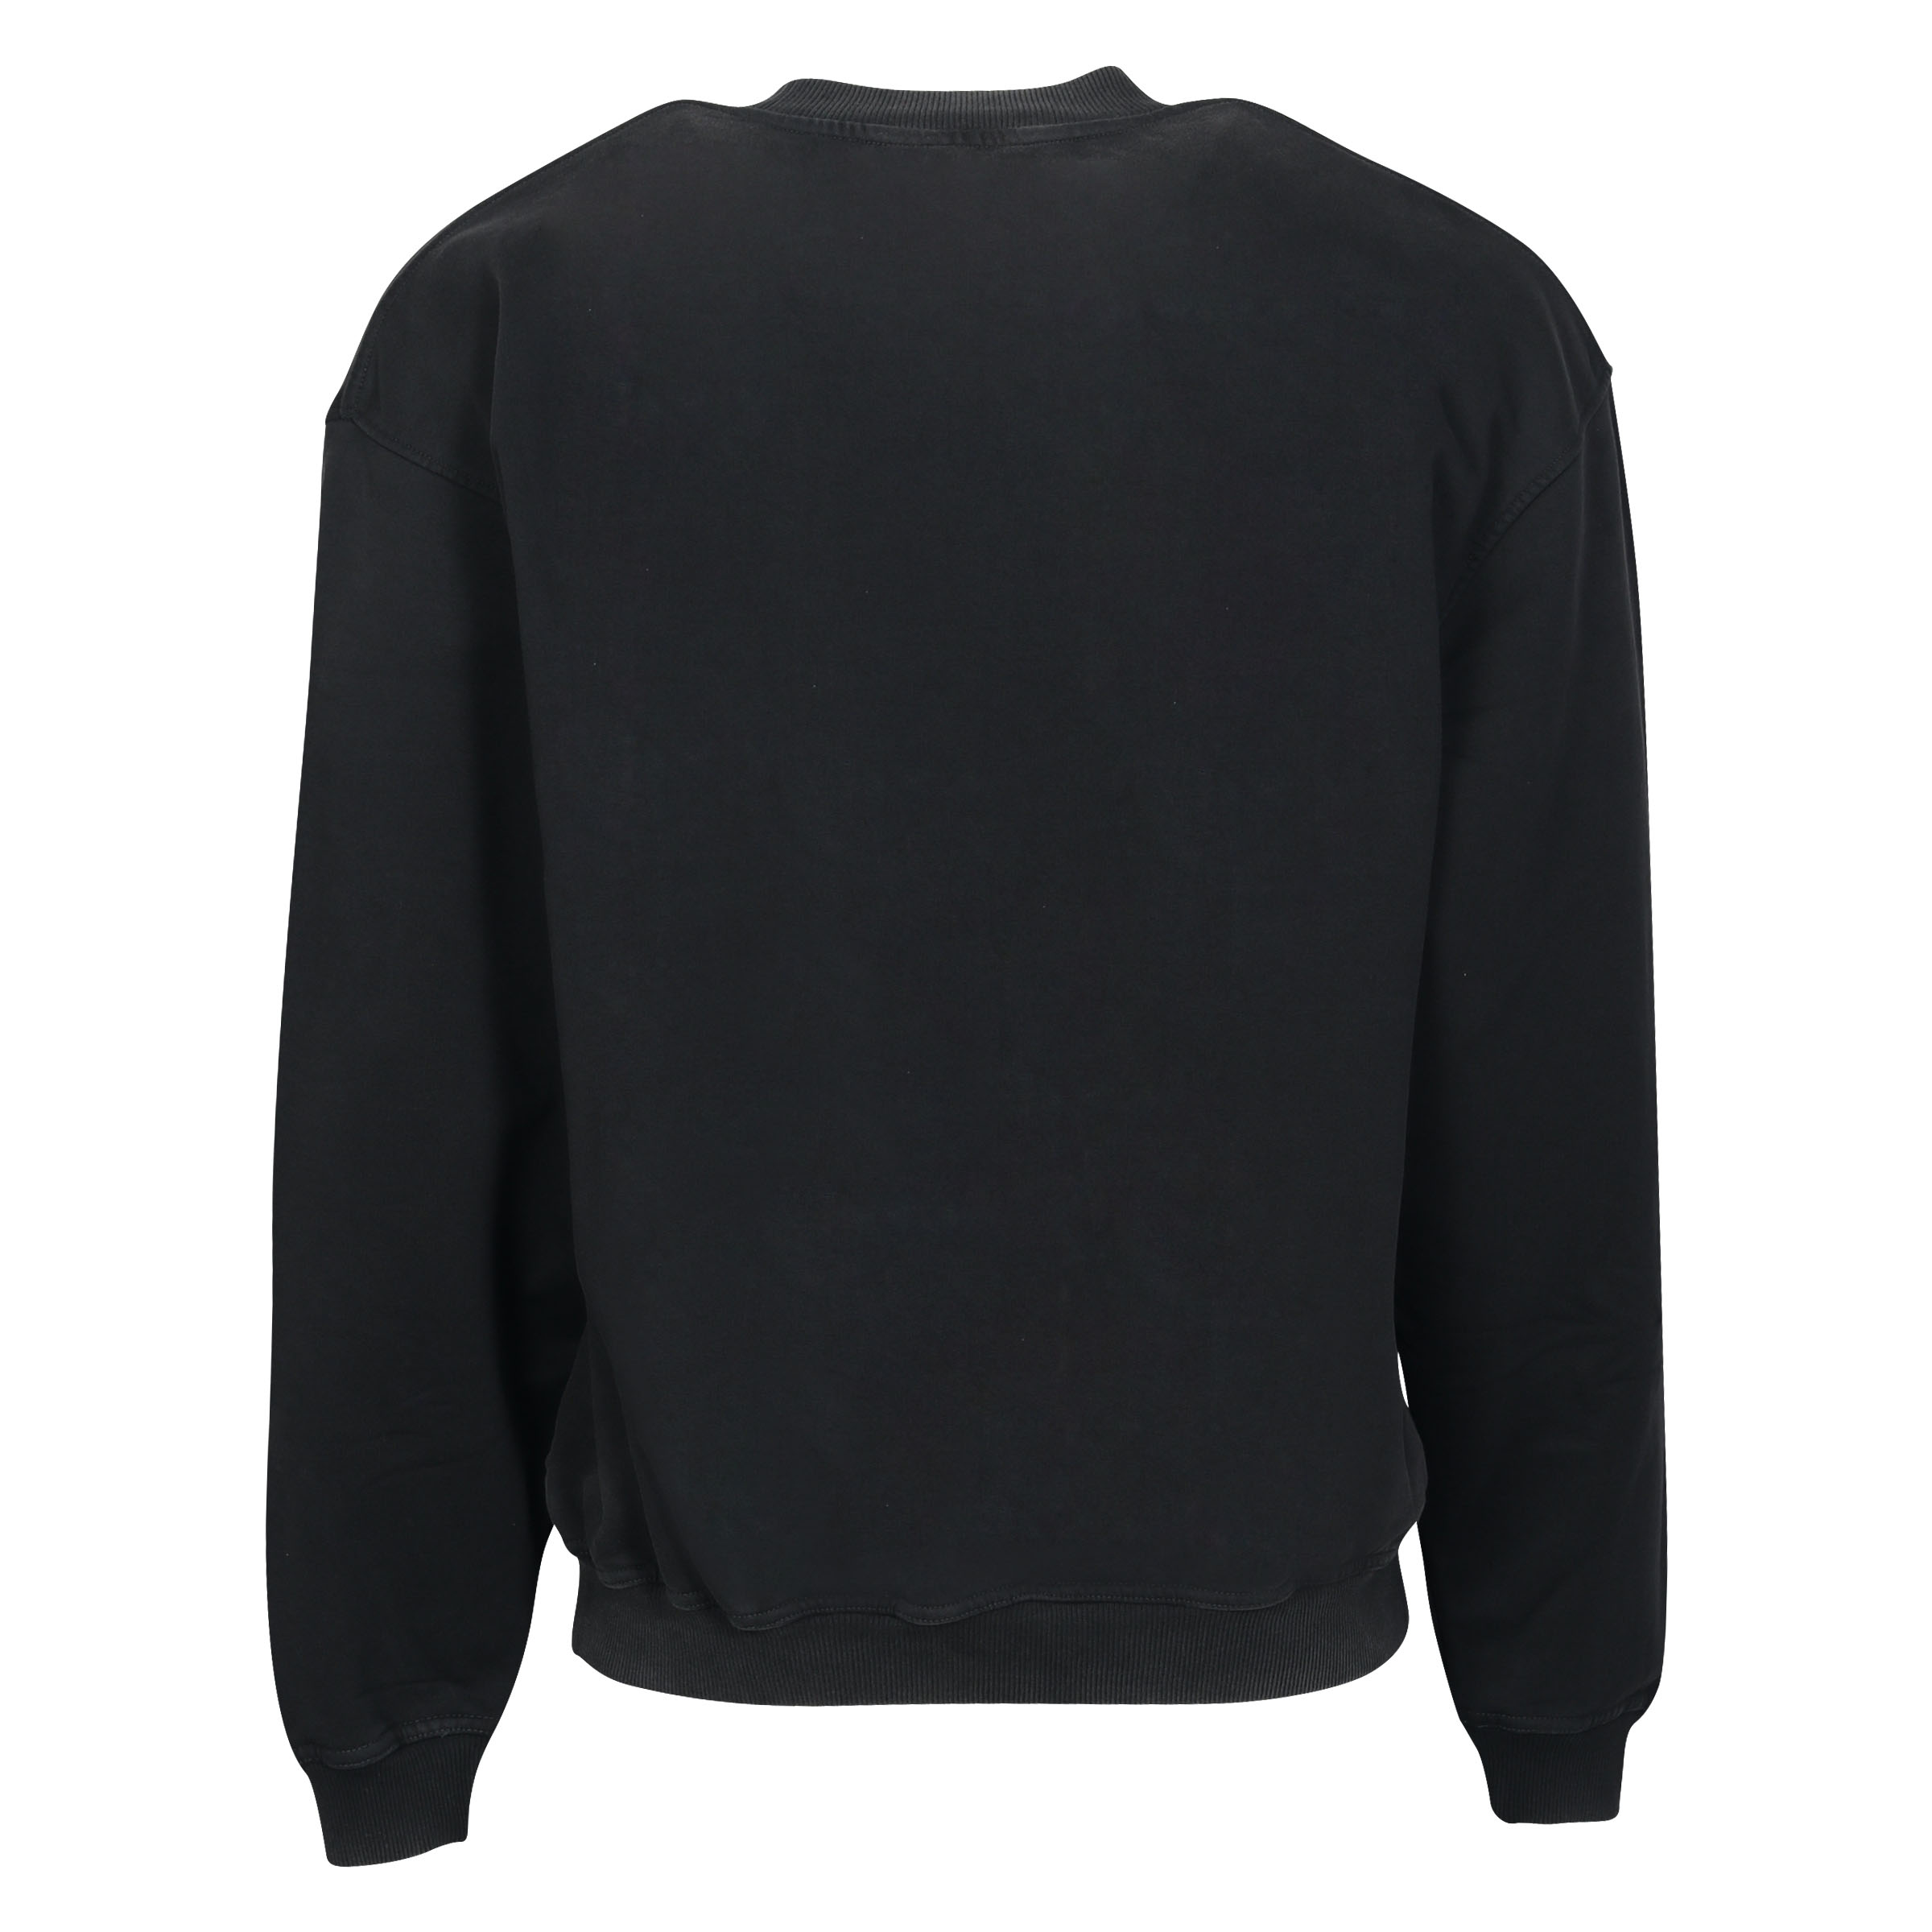 Represent Blank Sweater in Vintage Black